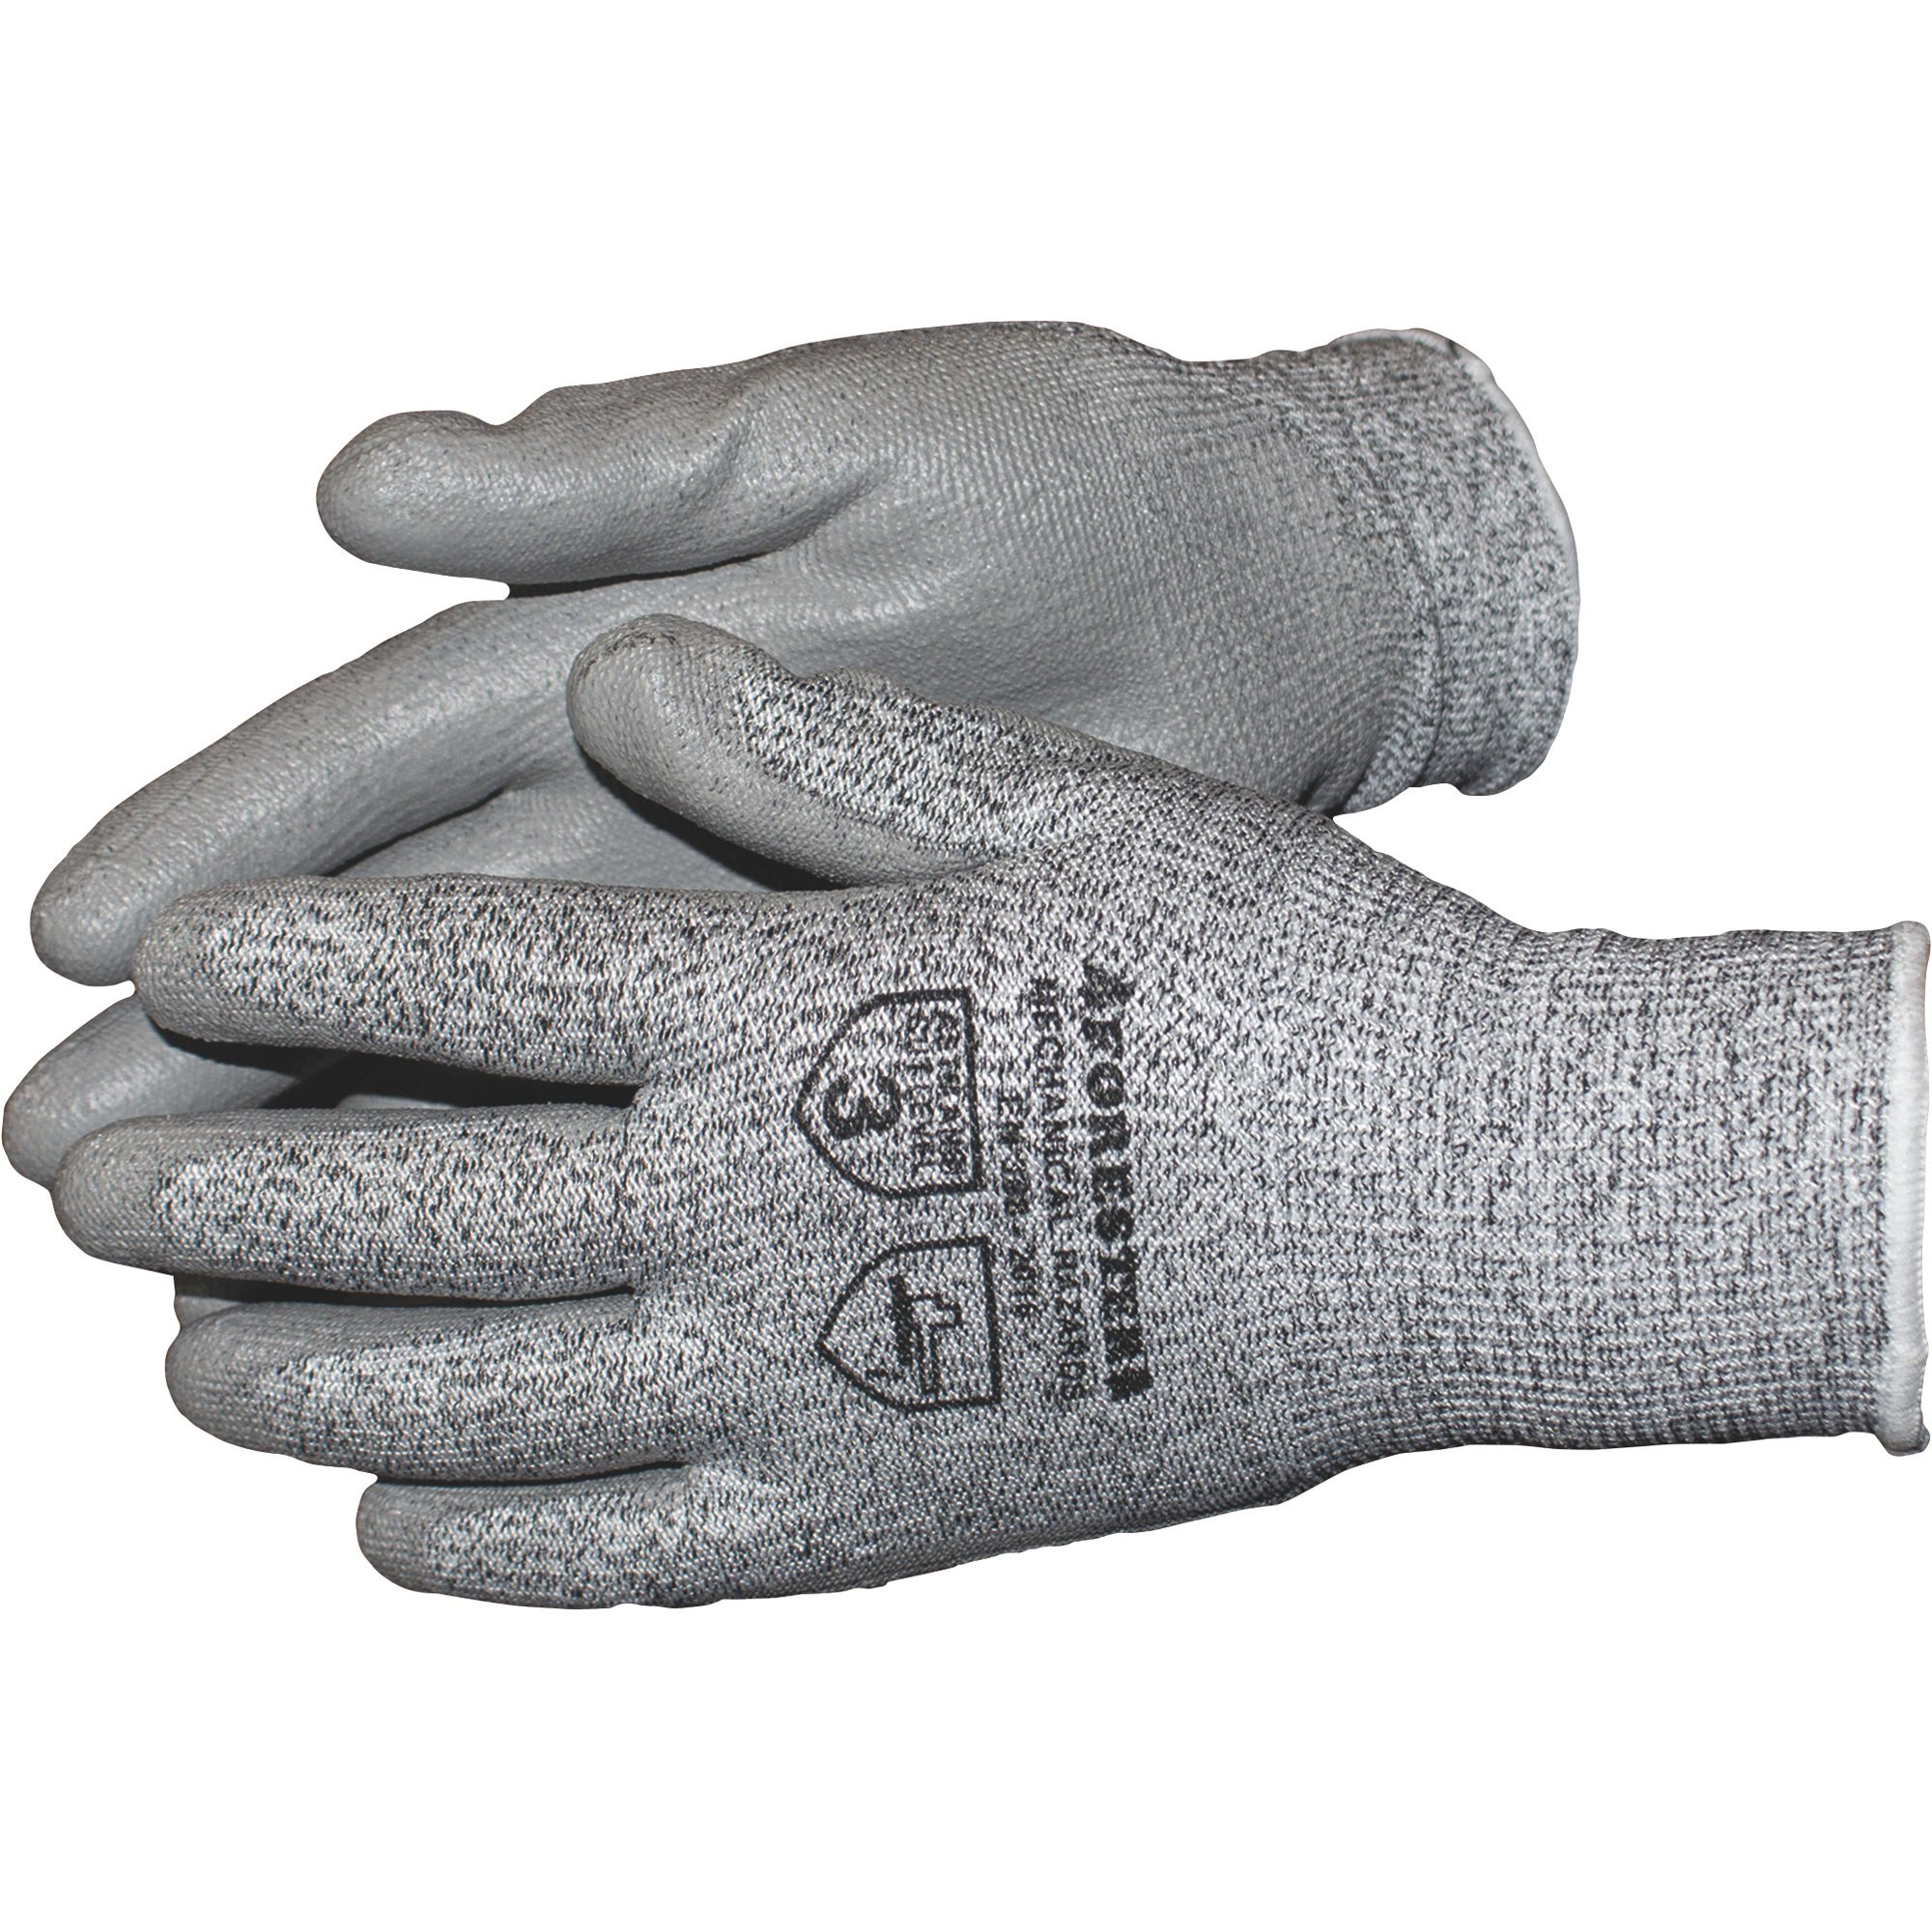 Forester ANSI Cut-Resistant Level 3 Safety Gloves